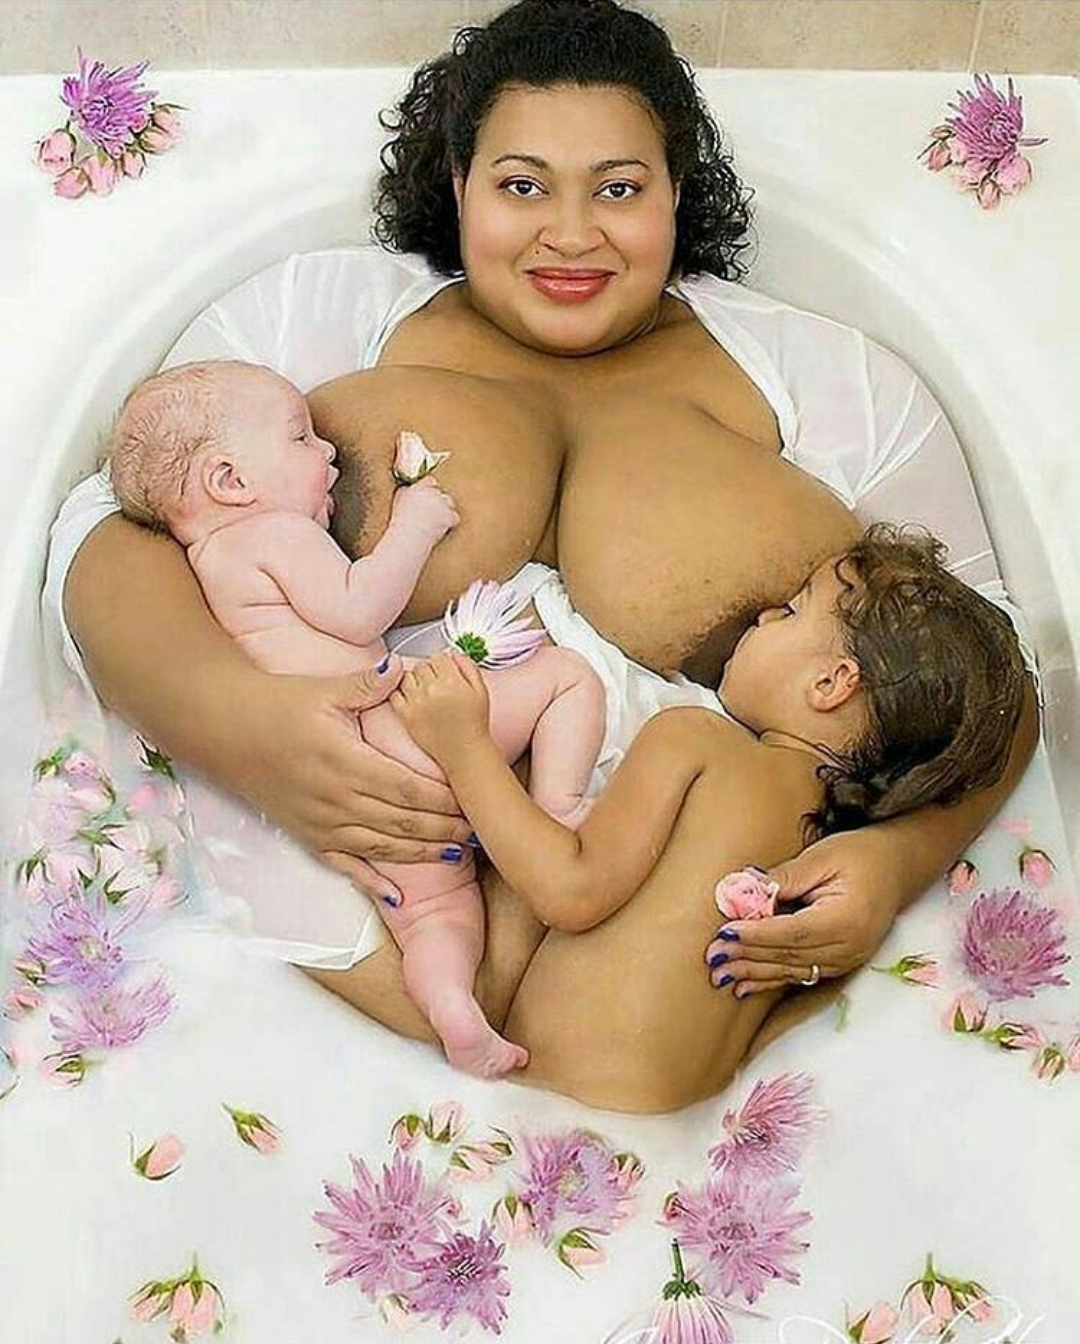 Checkout this viral breastfeeding photo 